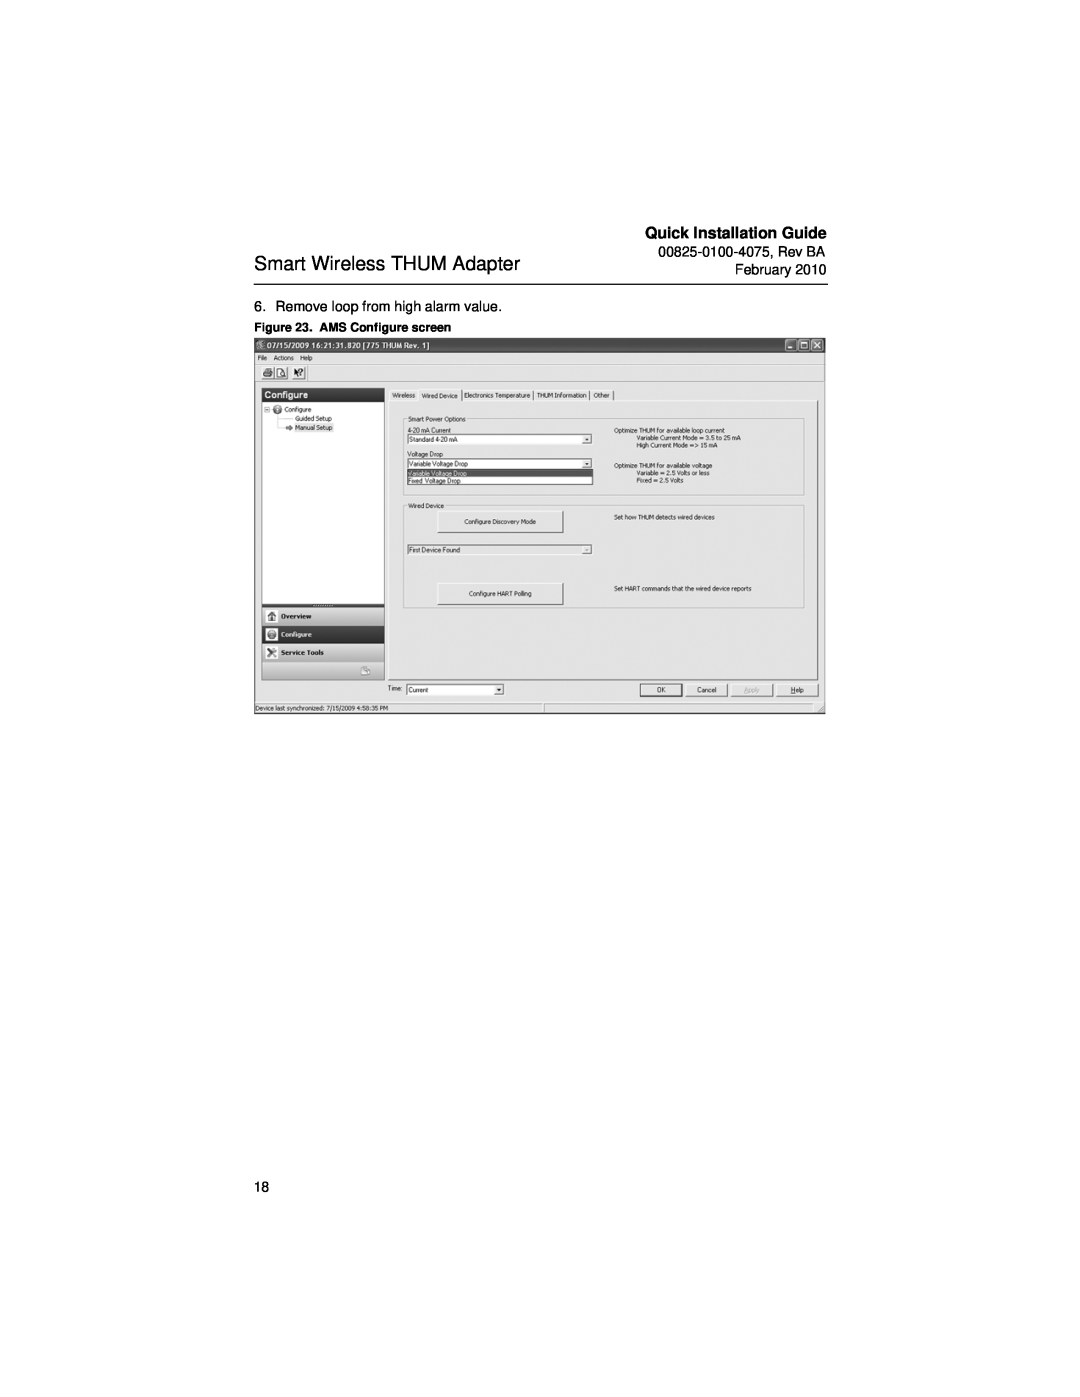 Emerson 00825-0100-4075 manual Smart Wireless THUM Adapter, Quick Installation Guide, AMS Configure screen 